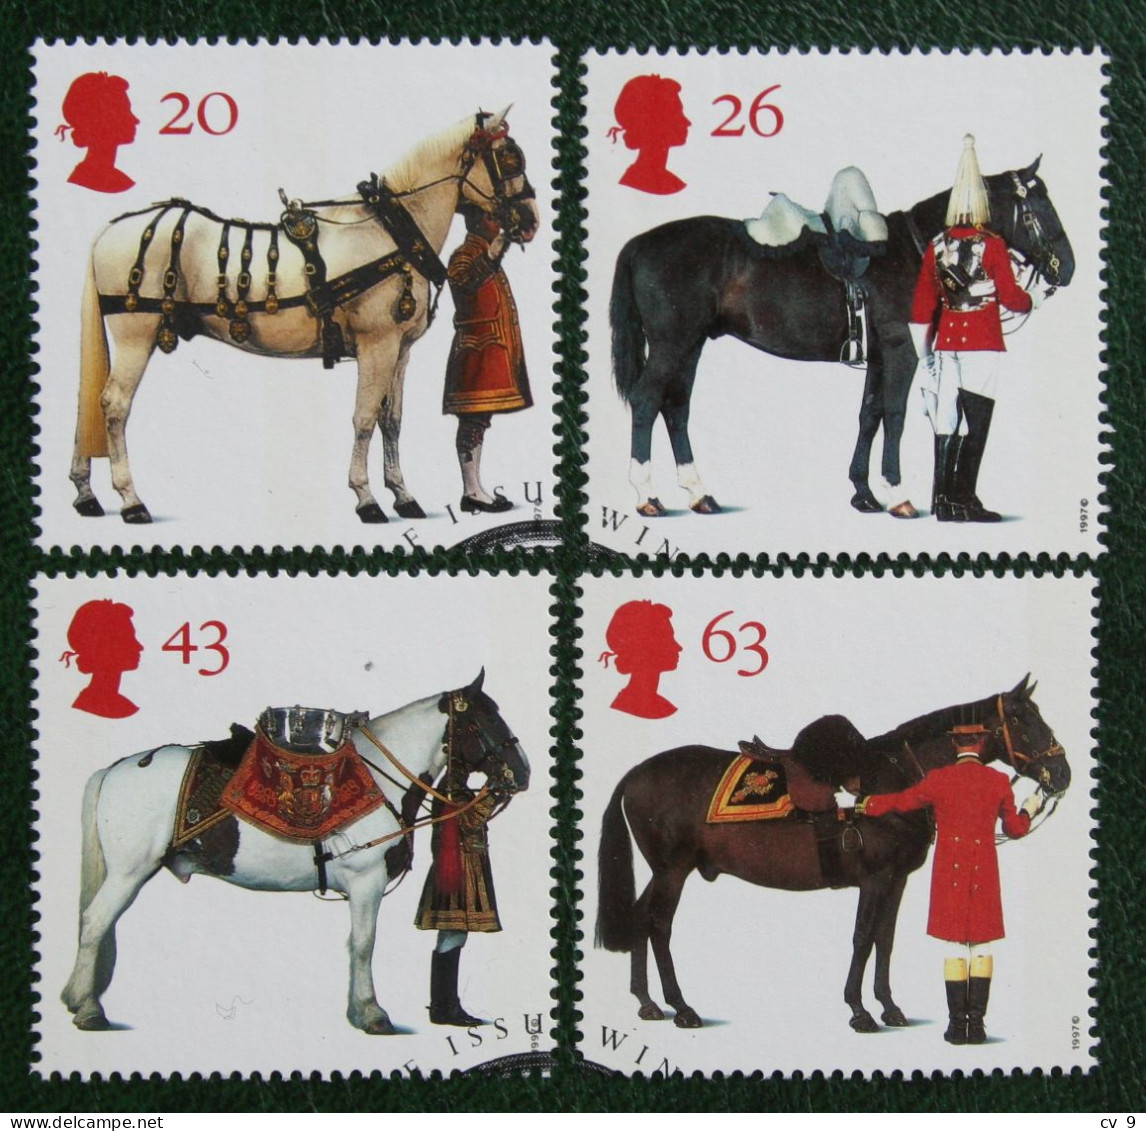 All The Queen's Horses Pferd Paard (Mi 1701-1704) 1997 Used Gebruikt Oblitere ENGLAND GRANDE-BRETAGNE GB GREAT BRITAIN - Oblitérés